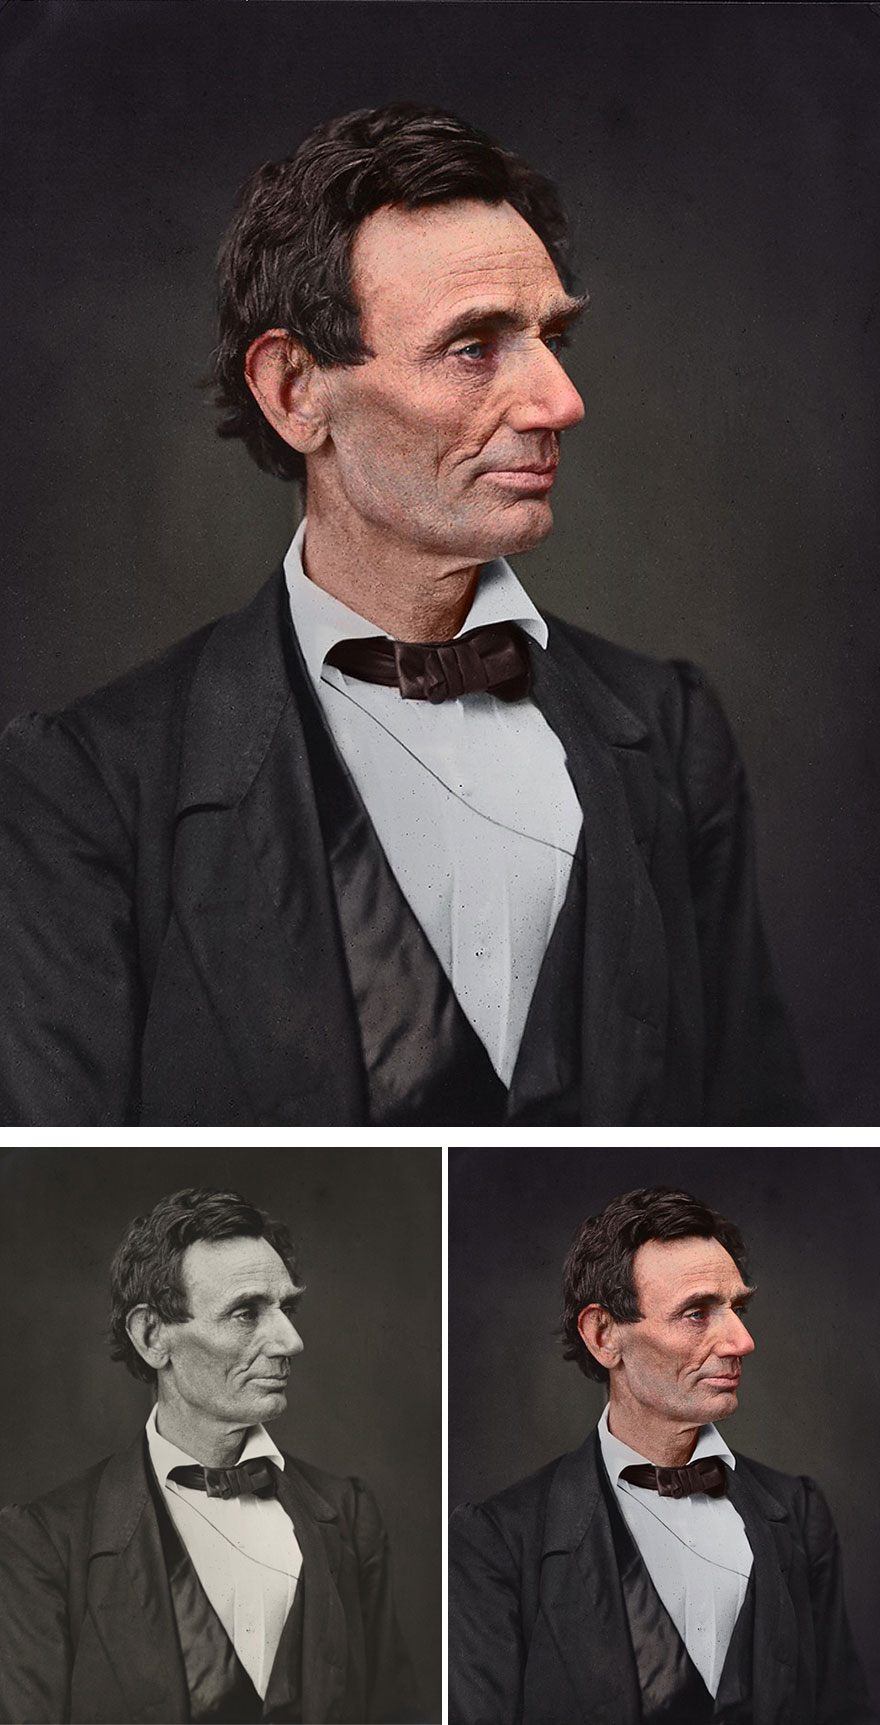 5. Abraham Lincoln